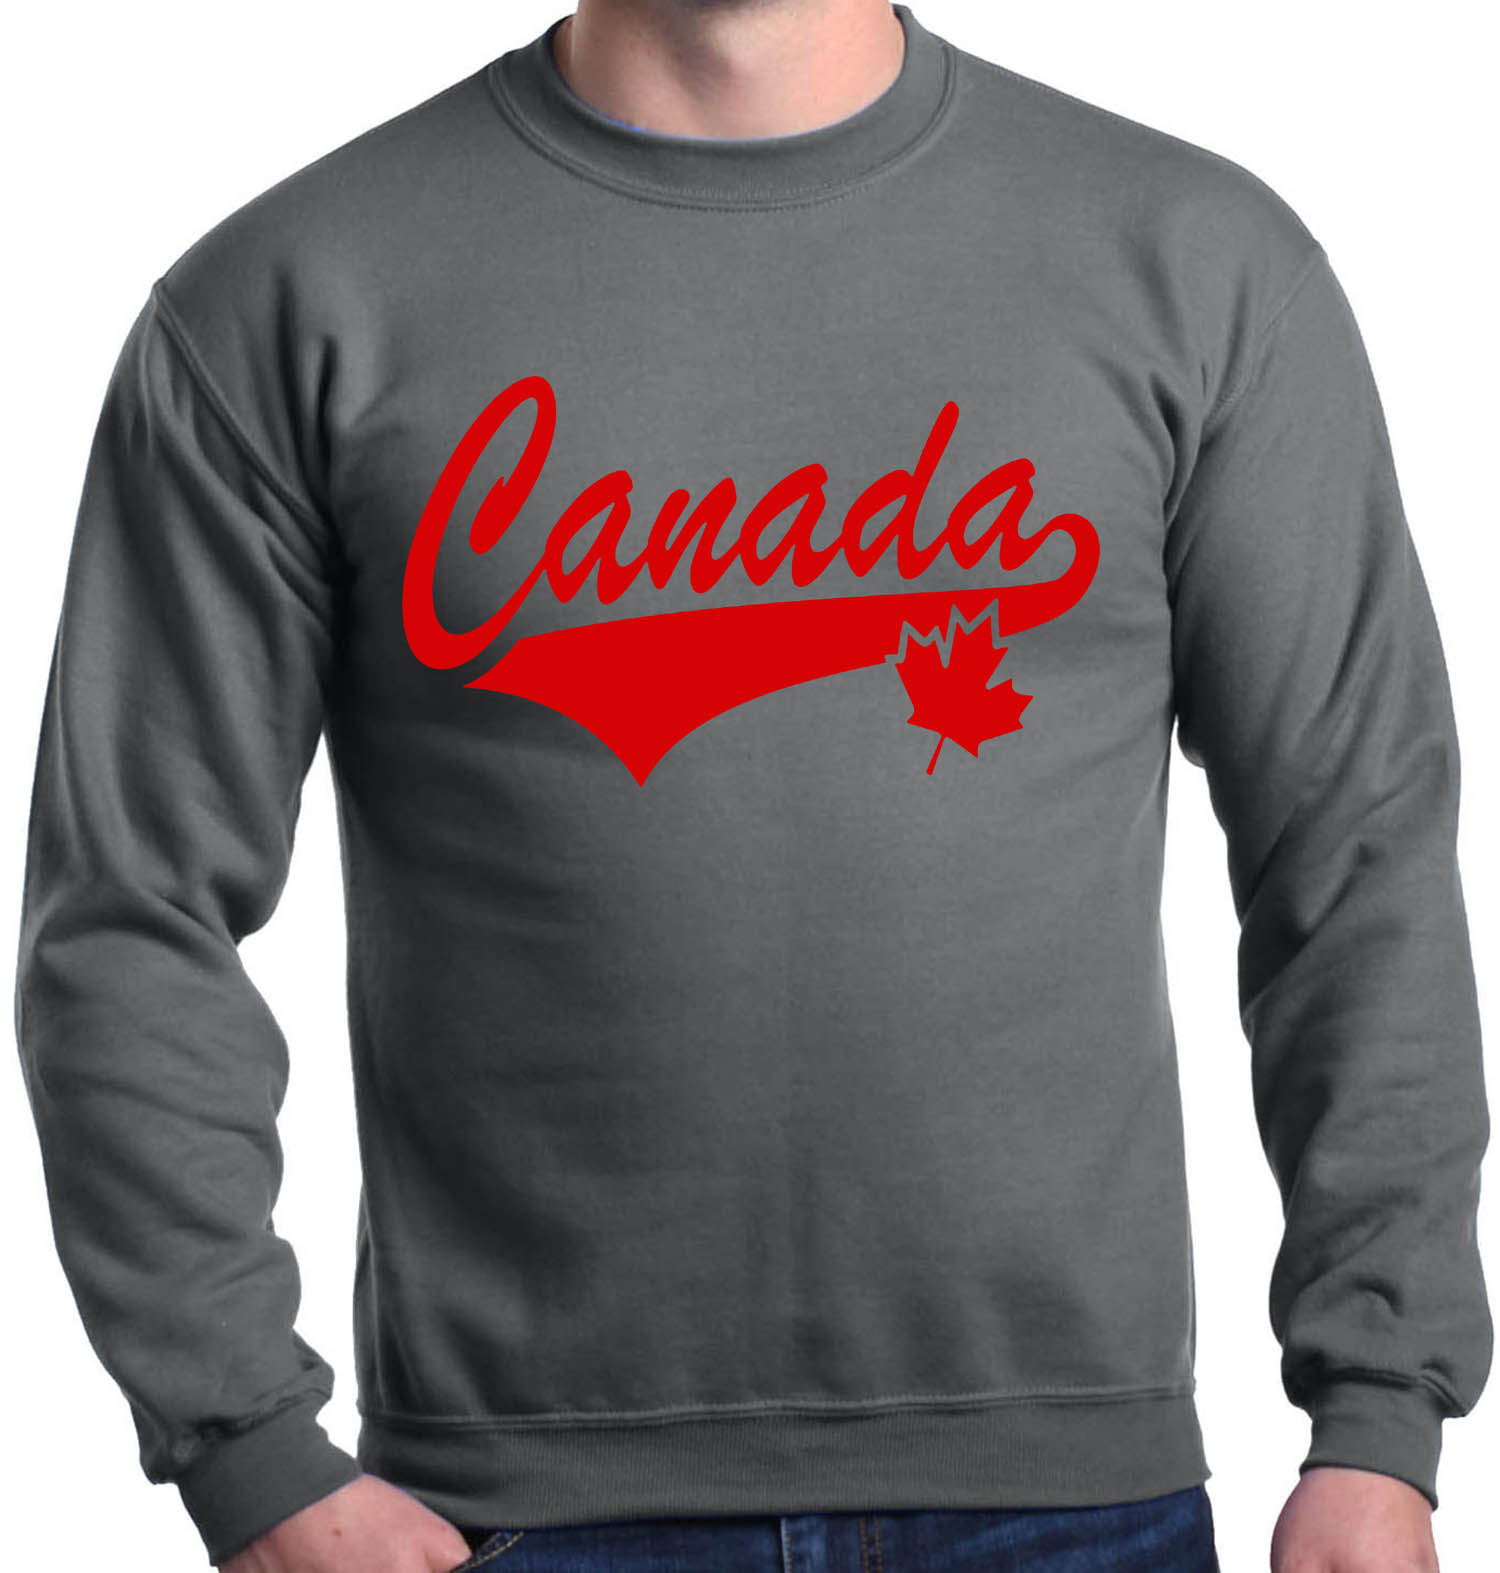 Shop4Ever - Shop4Ever Men's Canada Red with Leaf Canadian Flag Crewneck ...